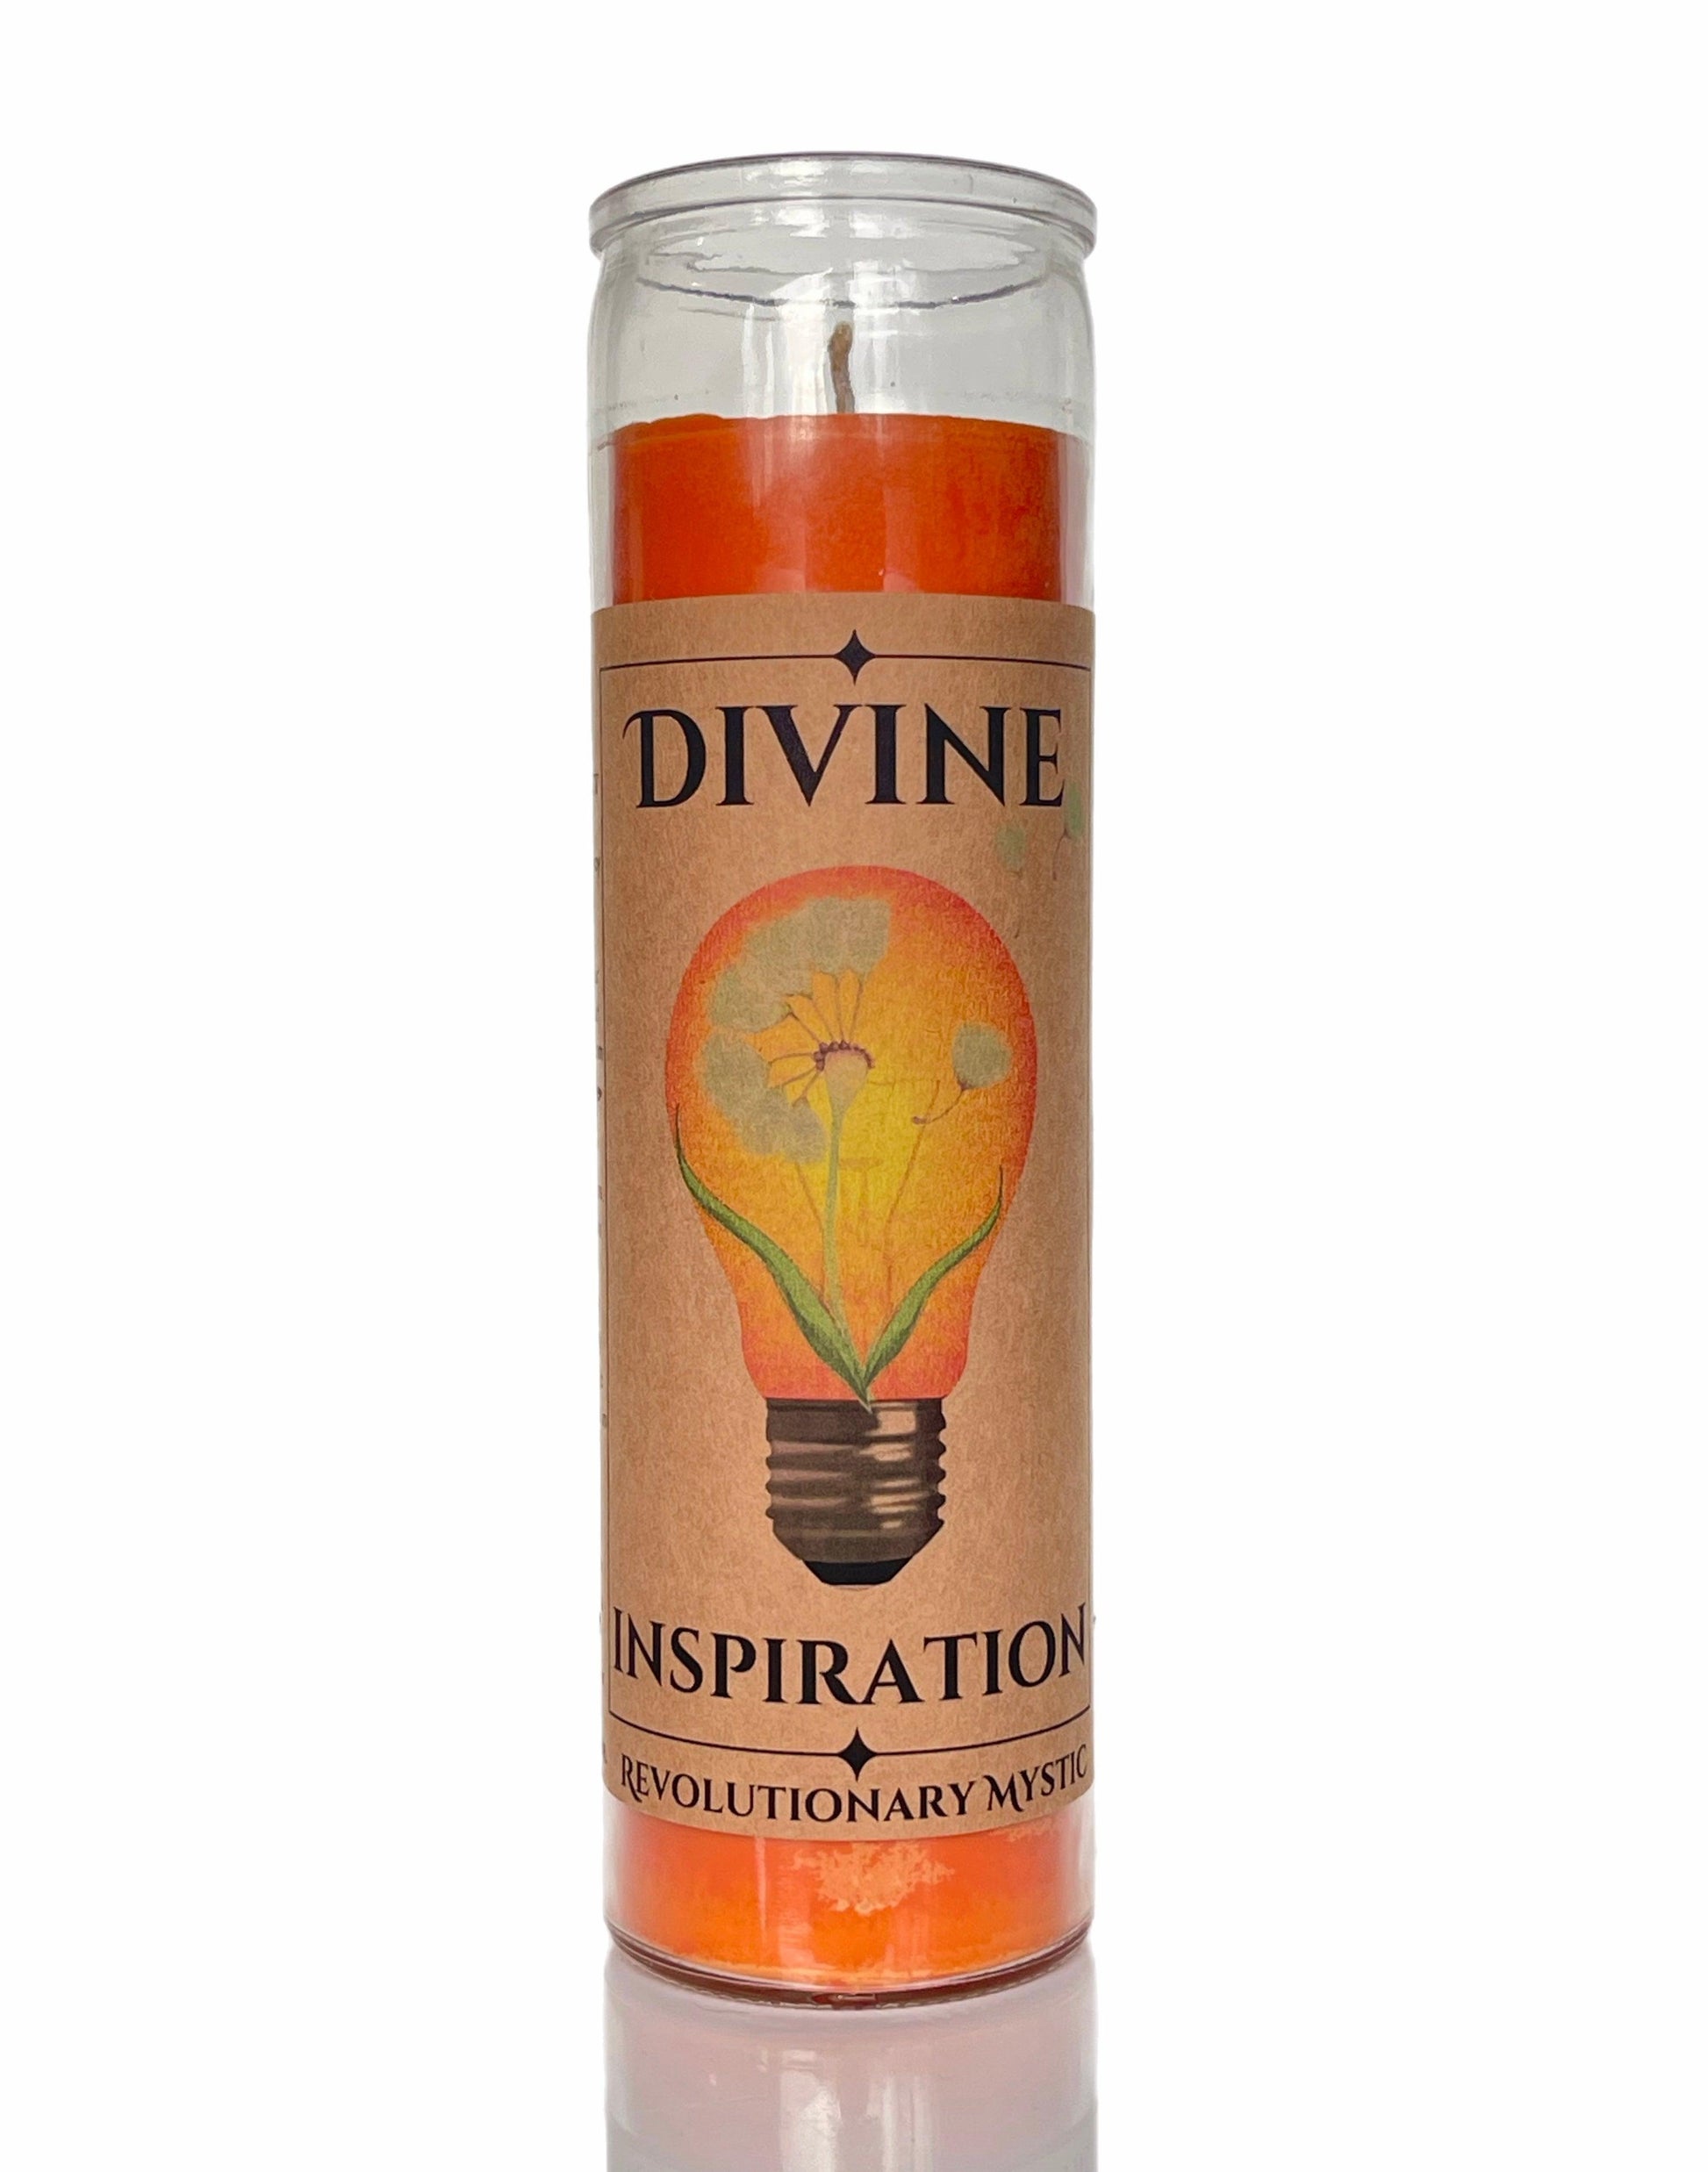 Divine Inspiration Candle - Revolutionary Mystic